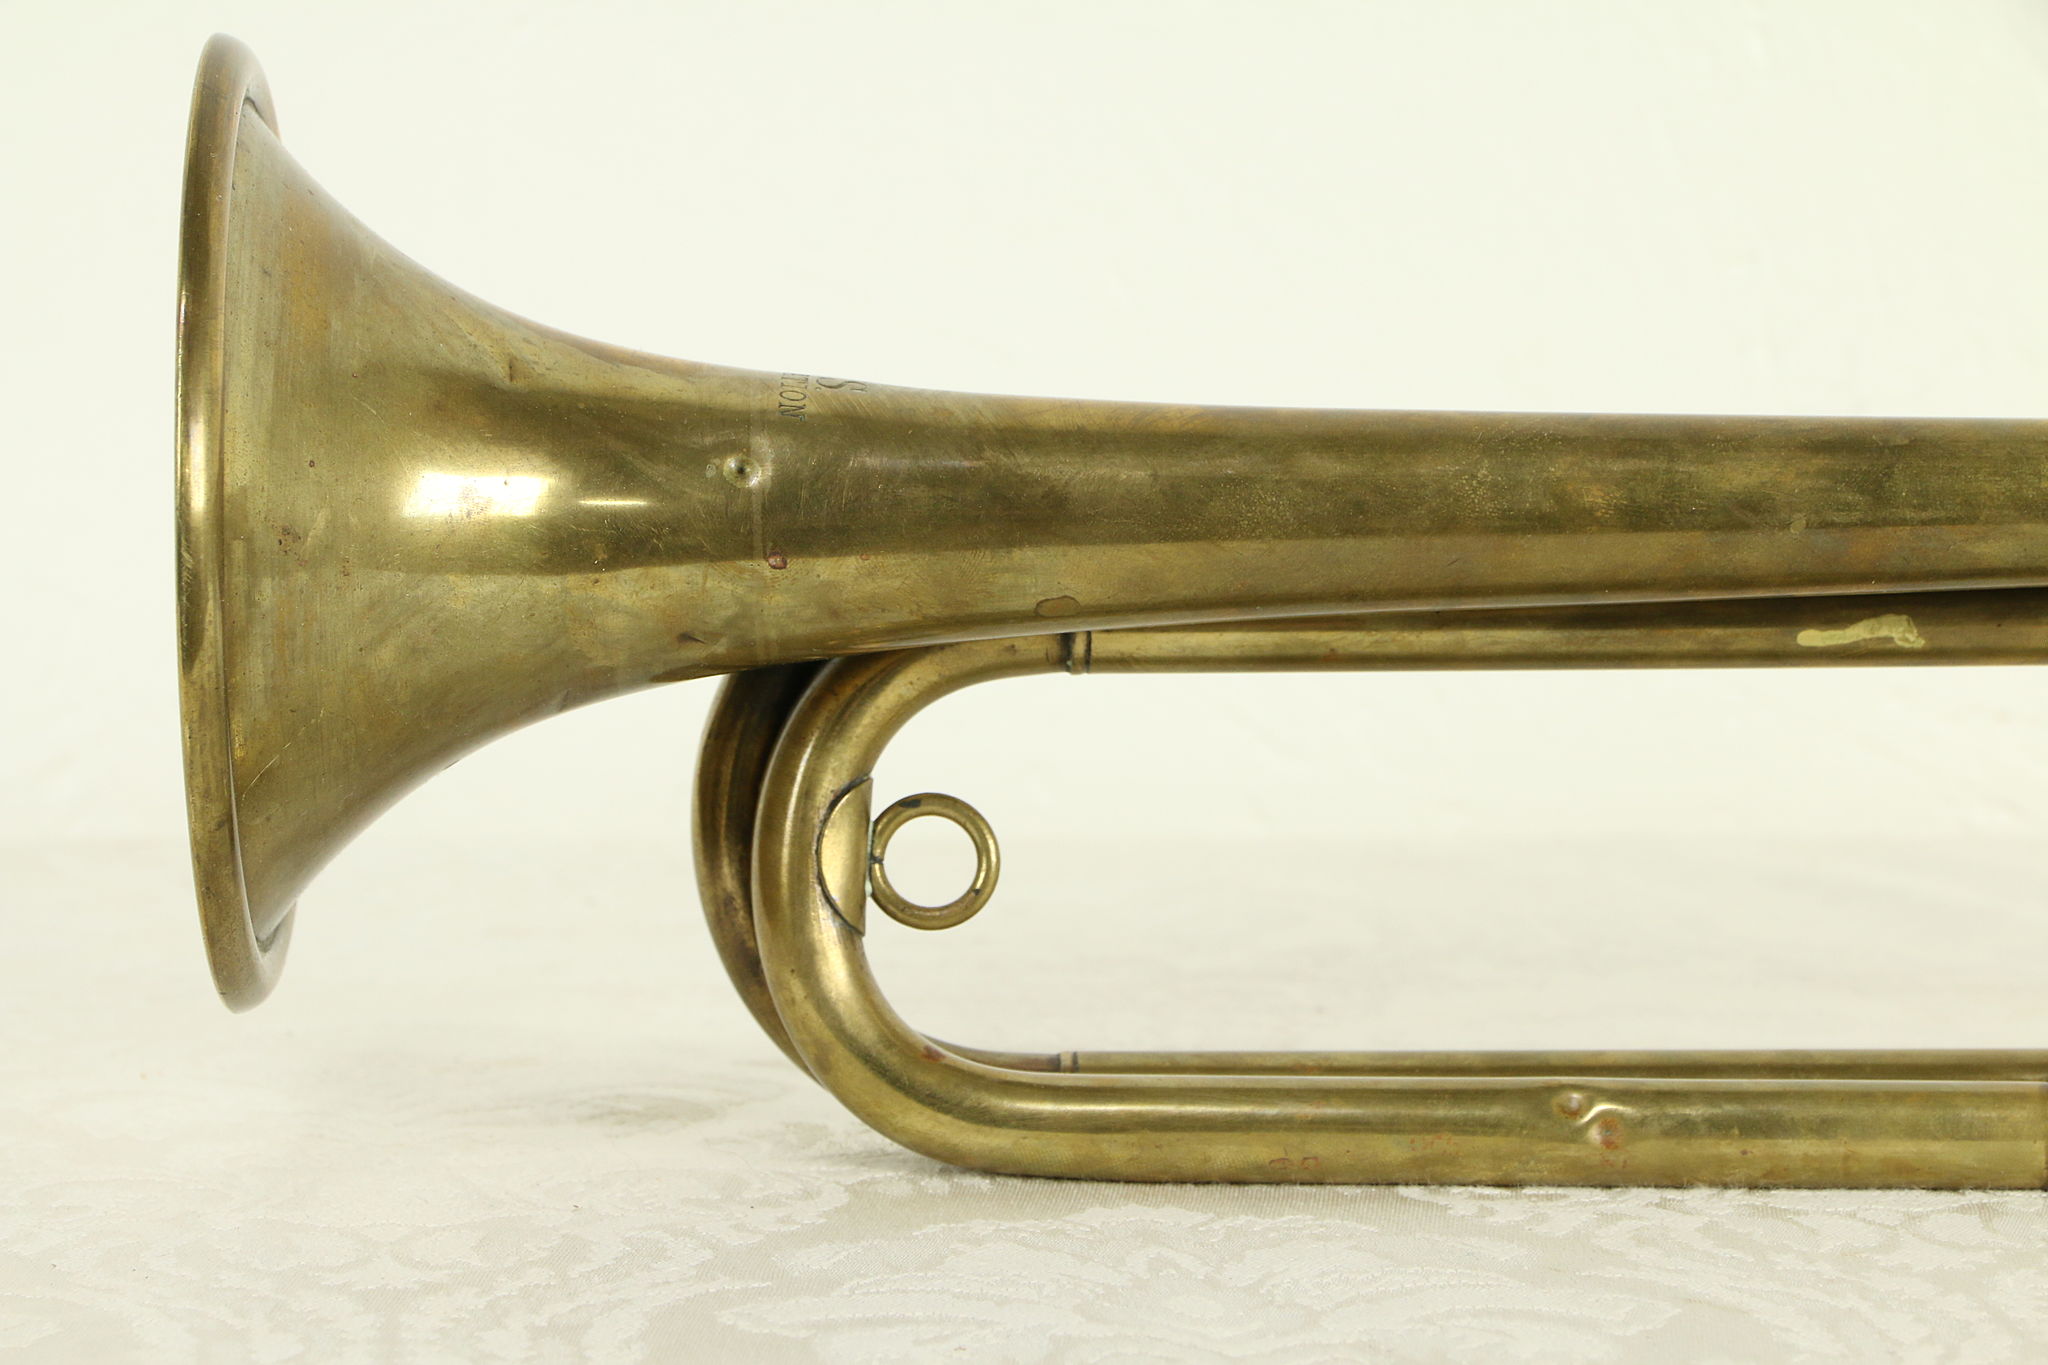 Brass Antique Military Bugle Horn, US Regulation, Bohemia